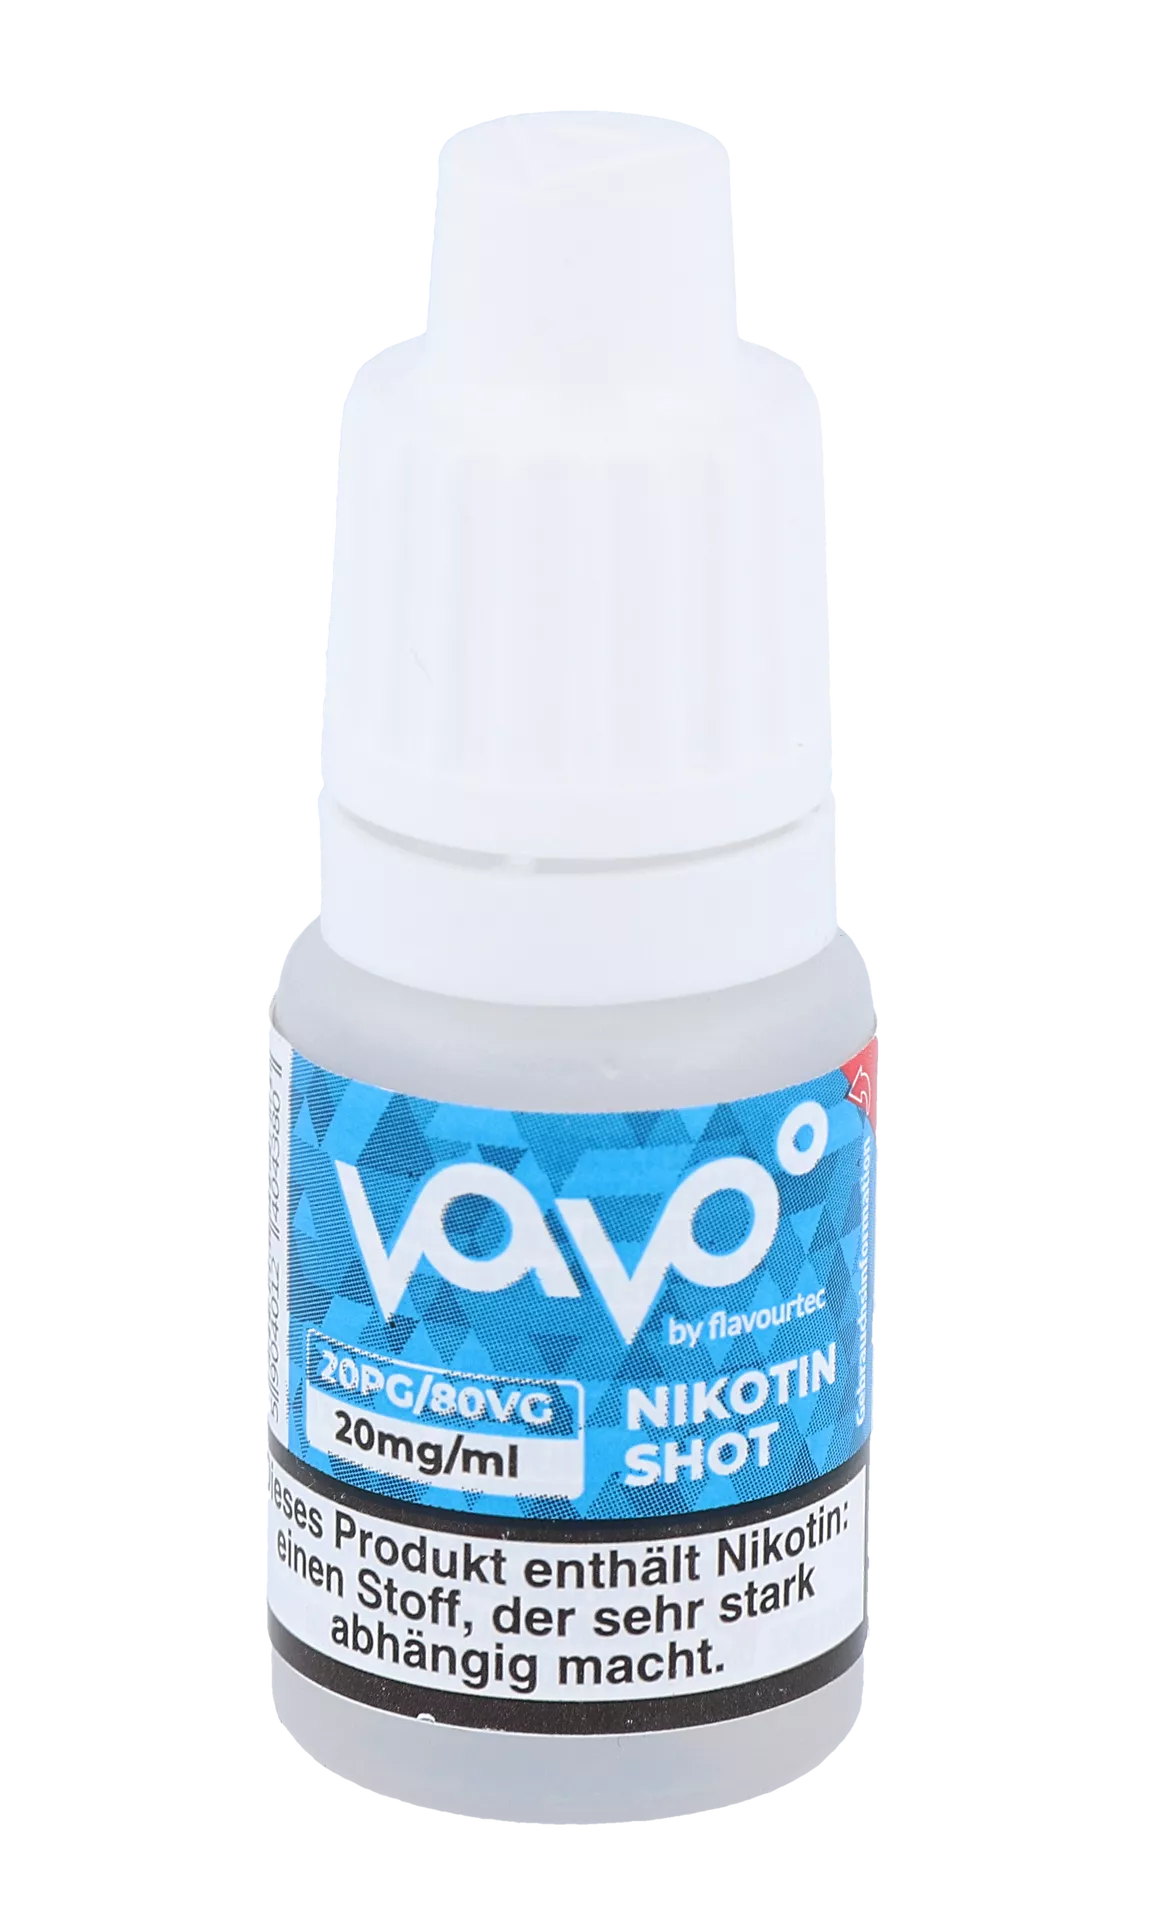 VAVO Nikotinshot 10ml by Flavourtec 80 VG / 20 PG 18mg/ml